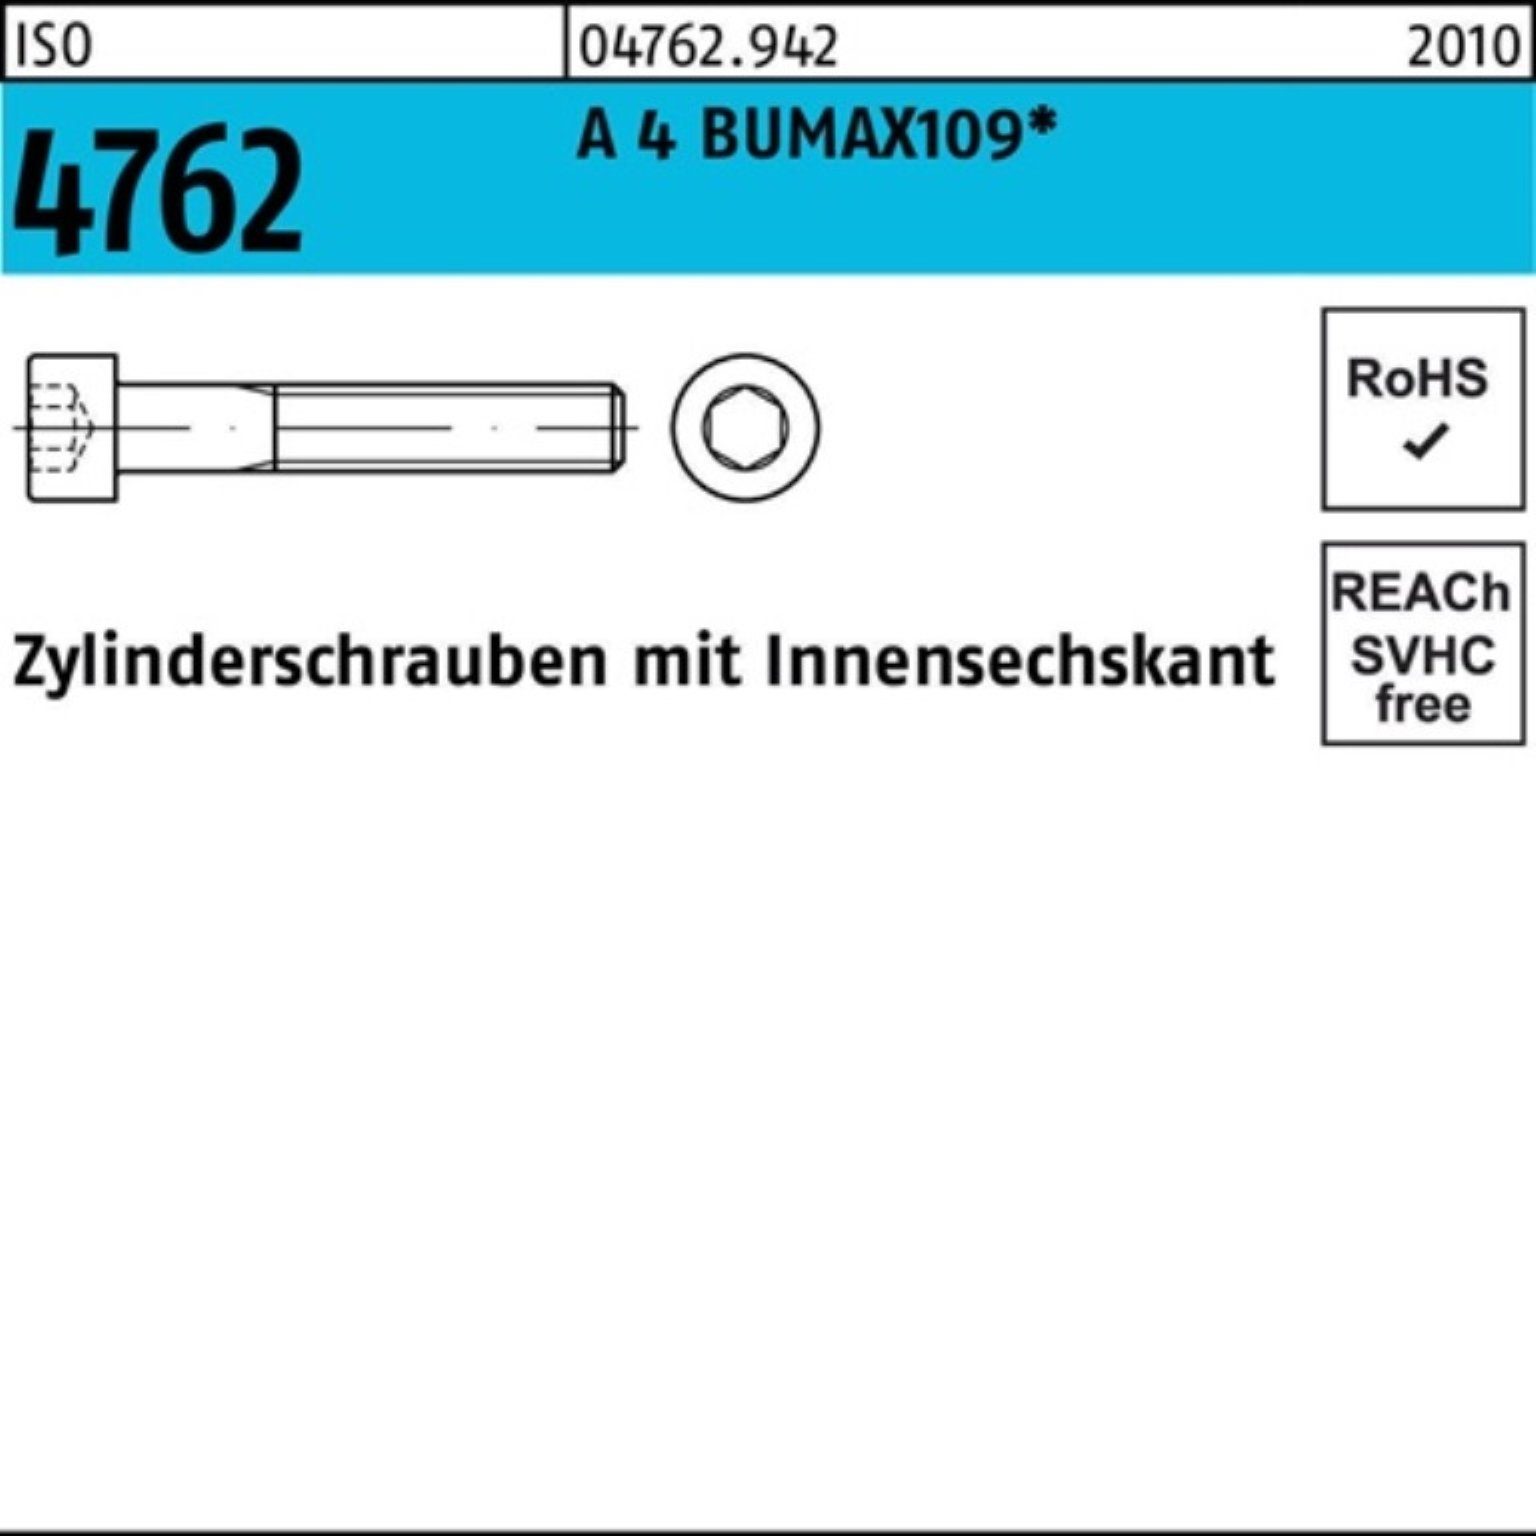 4762 M12x 50 Bufab Zylinderschraube A BUMAX109 ISO 100er Innen-6kt 4 Pack 25 Zylinderschraube